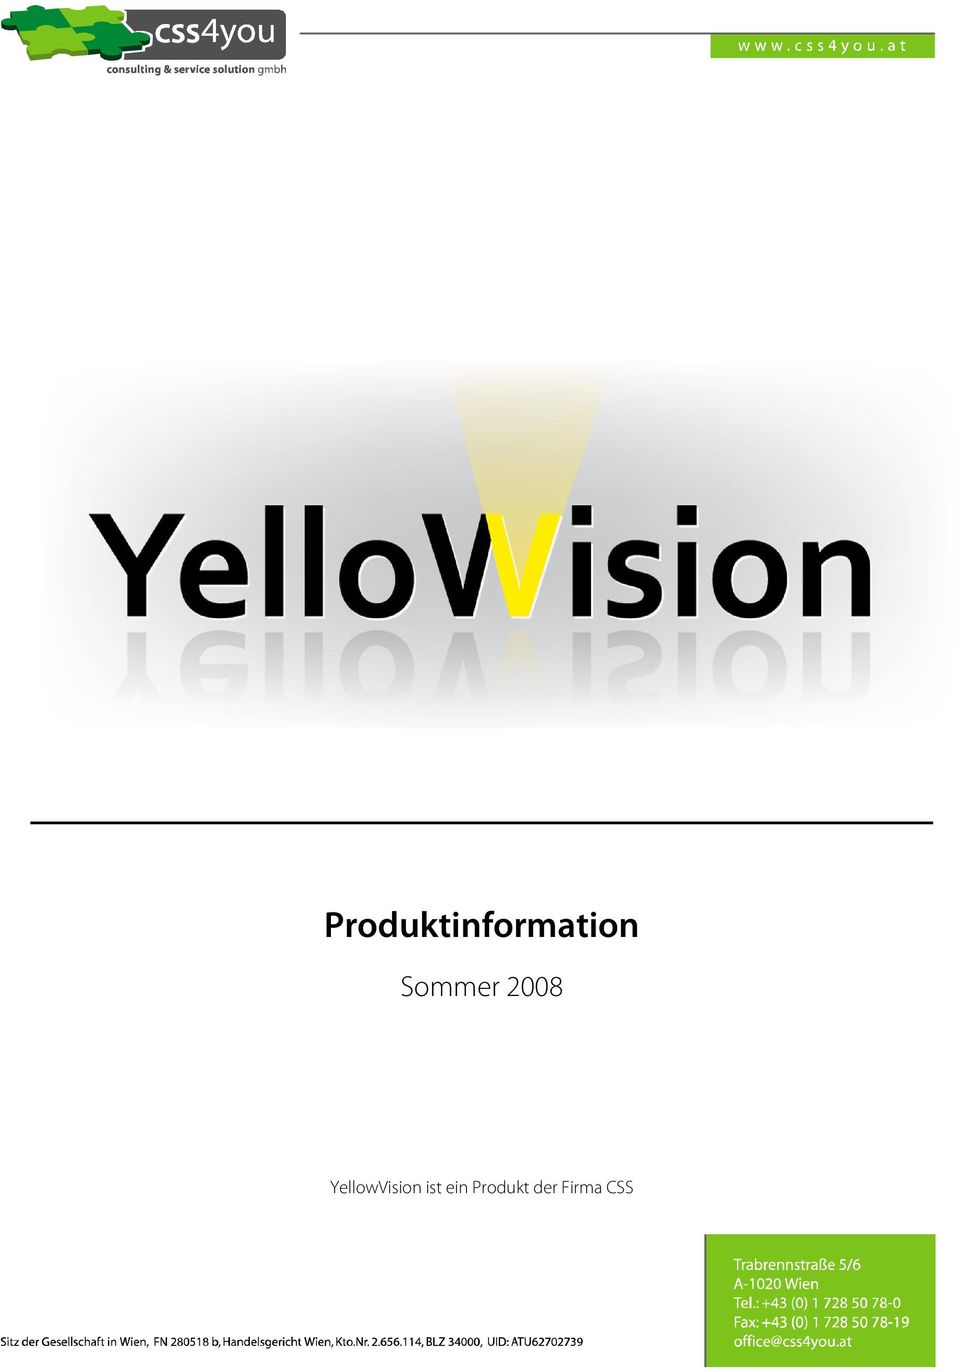 Yellow Vision ist